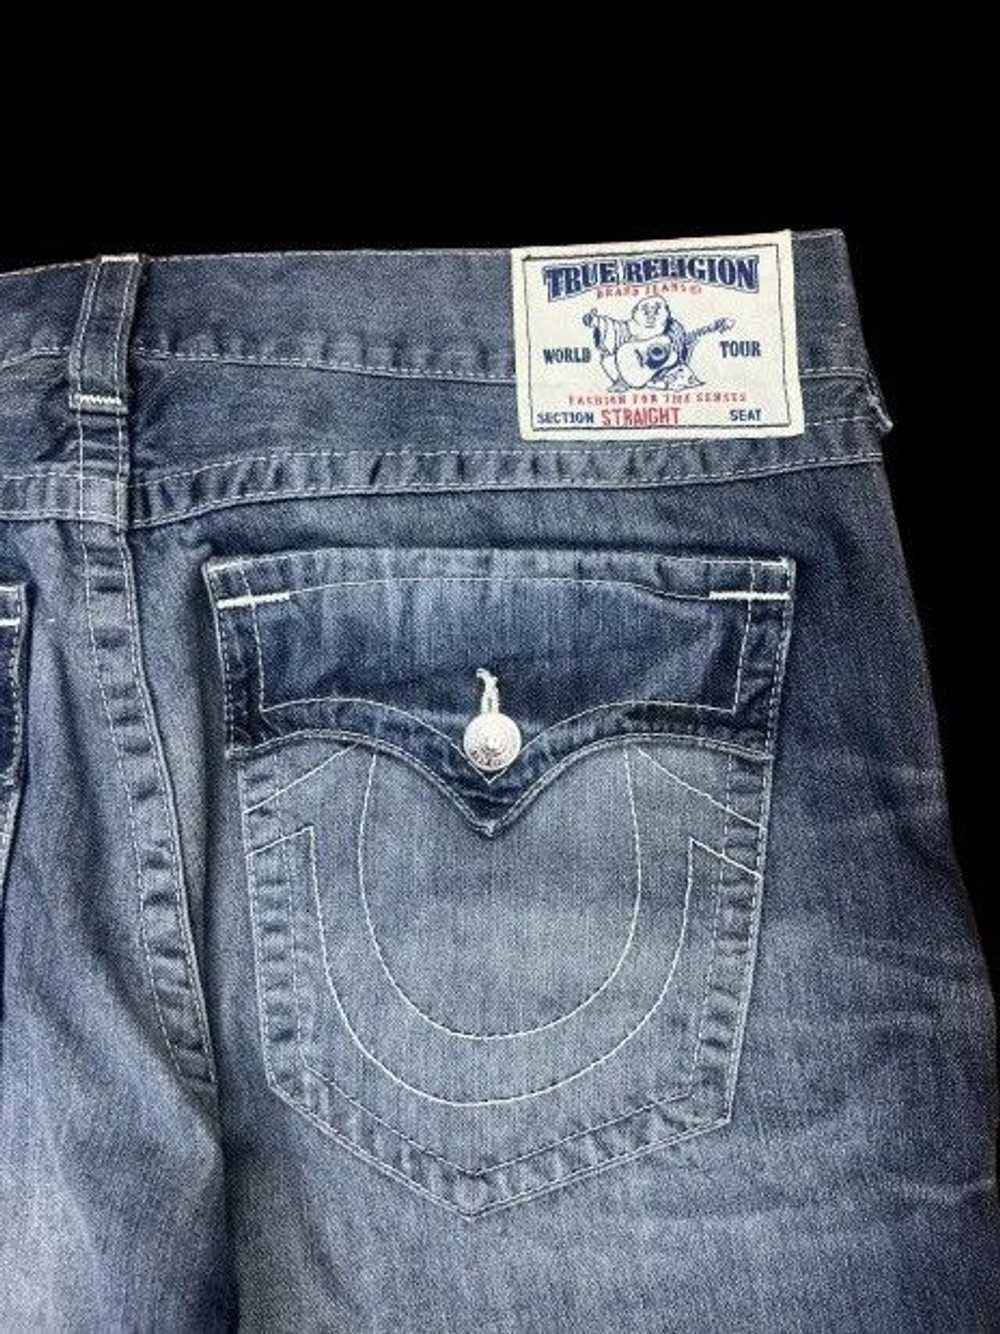 True Religion True Religion Jeans Size 40 - image 4